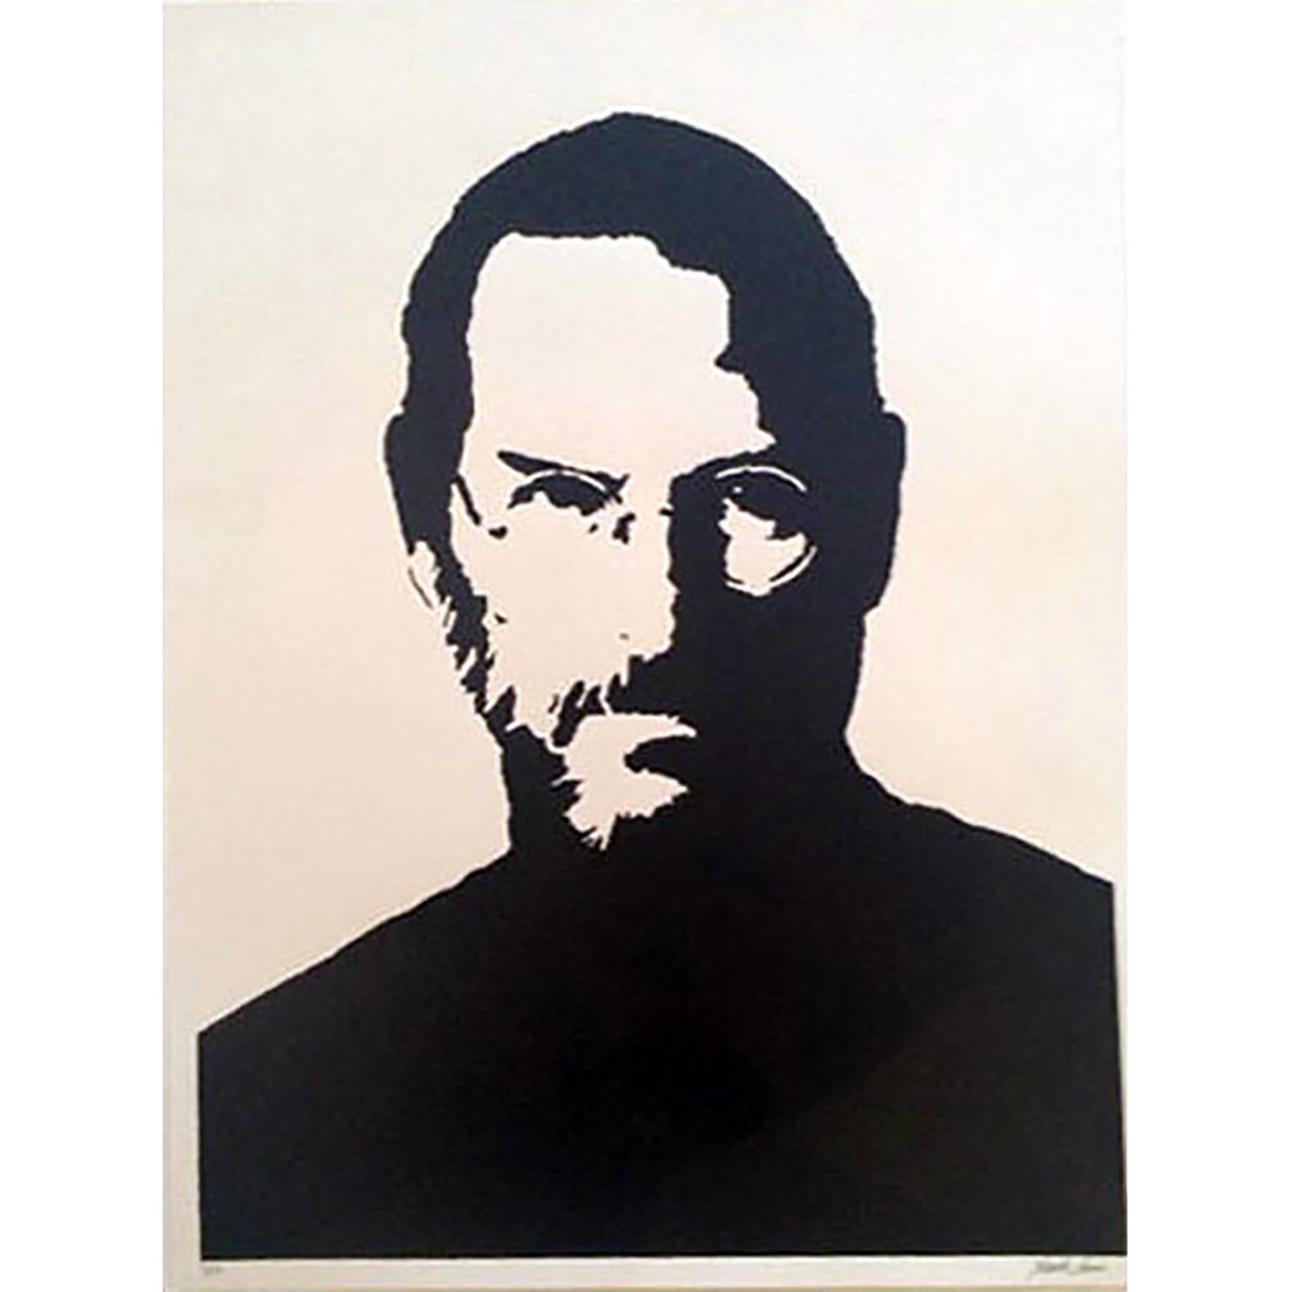 “Steve Jobs” Silk Screen Print on Archival Paper  - Painting by Plastic Jesus